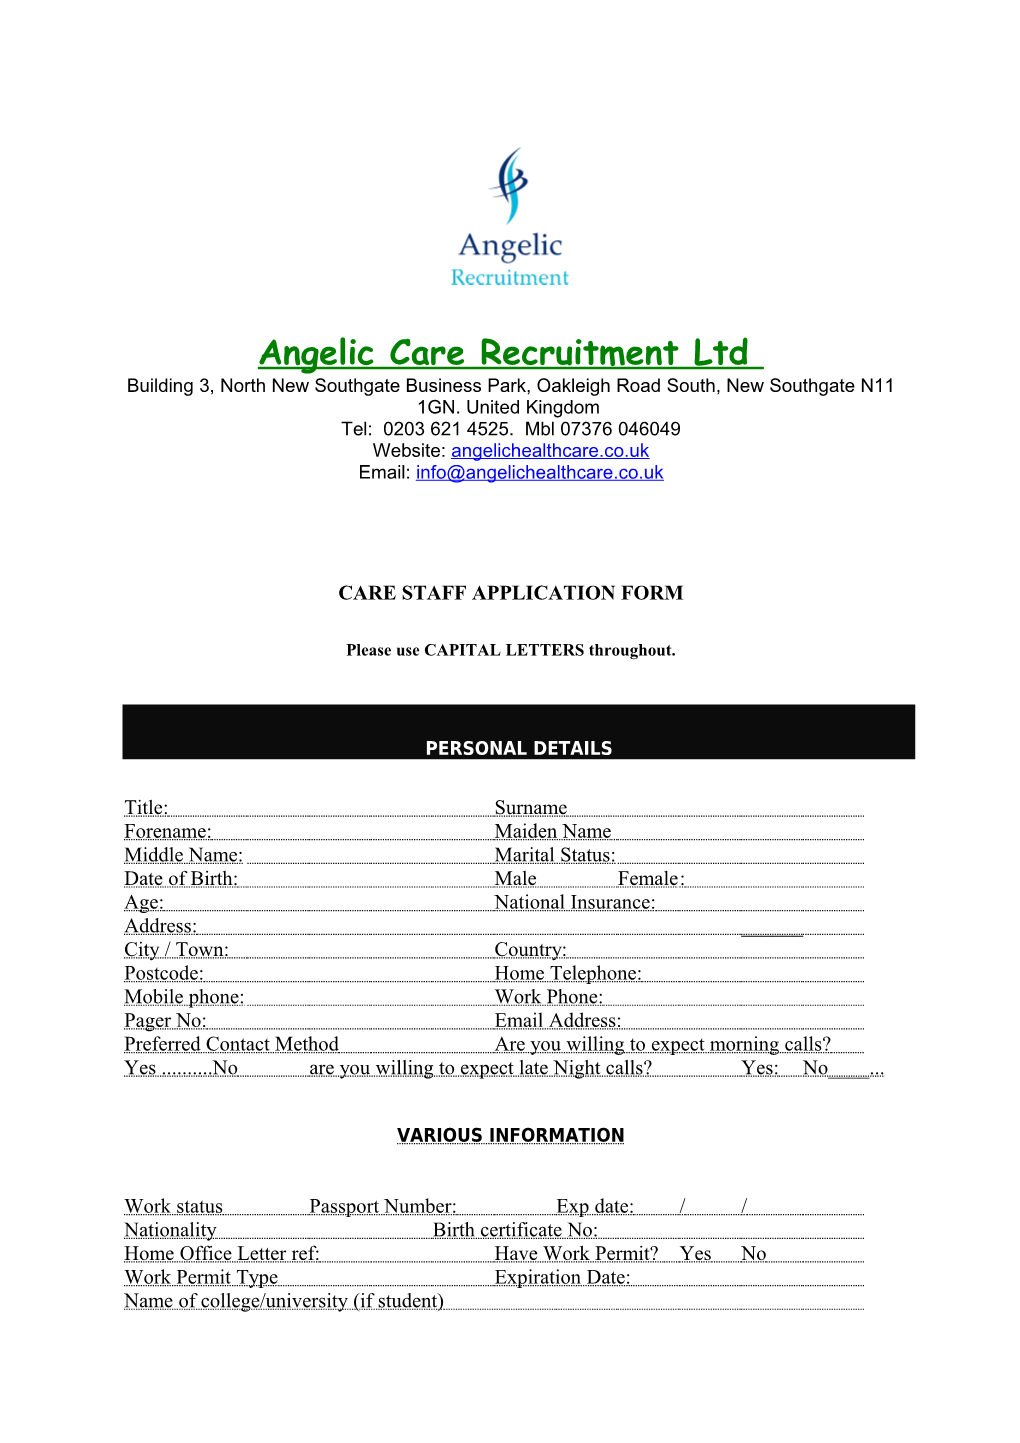 Angelic Care Recruitment Ltd